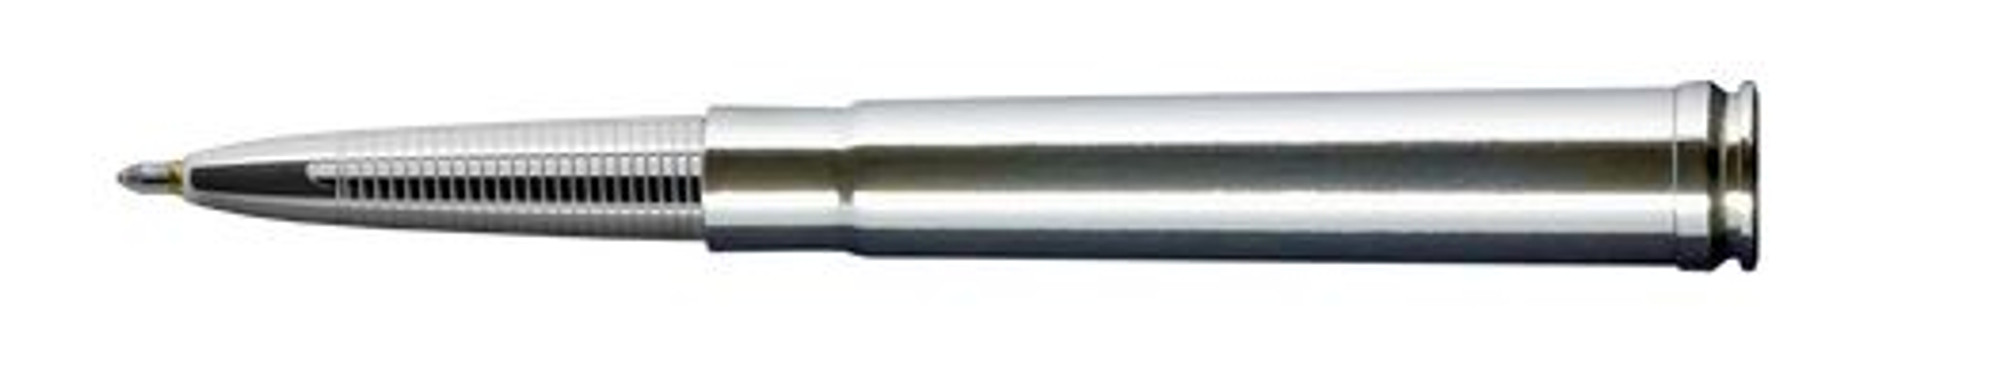 Fisher Space Pen .375TSB 'The Silver Bullet' H&H Pen- Chrome